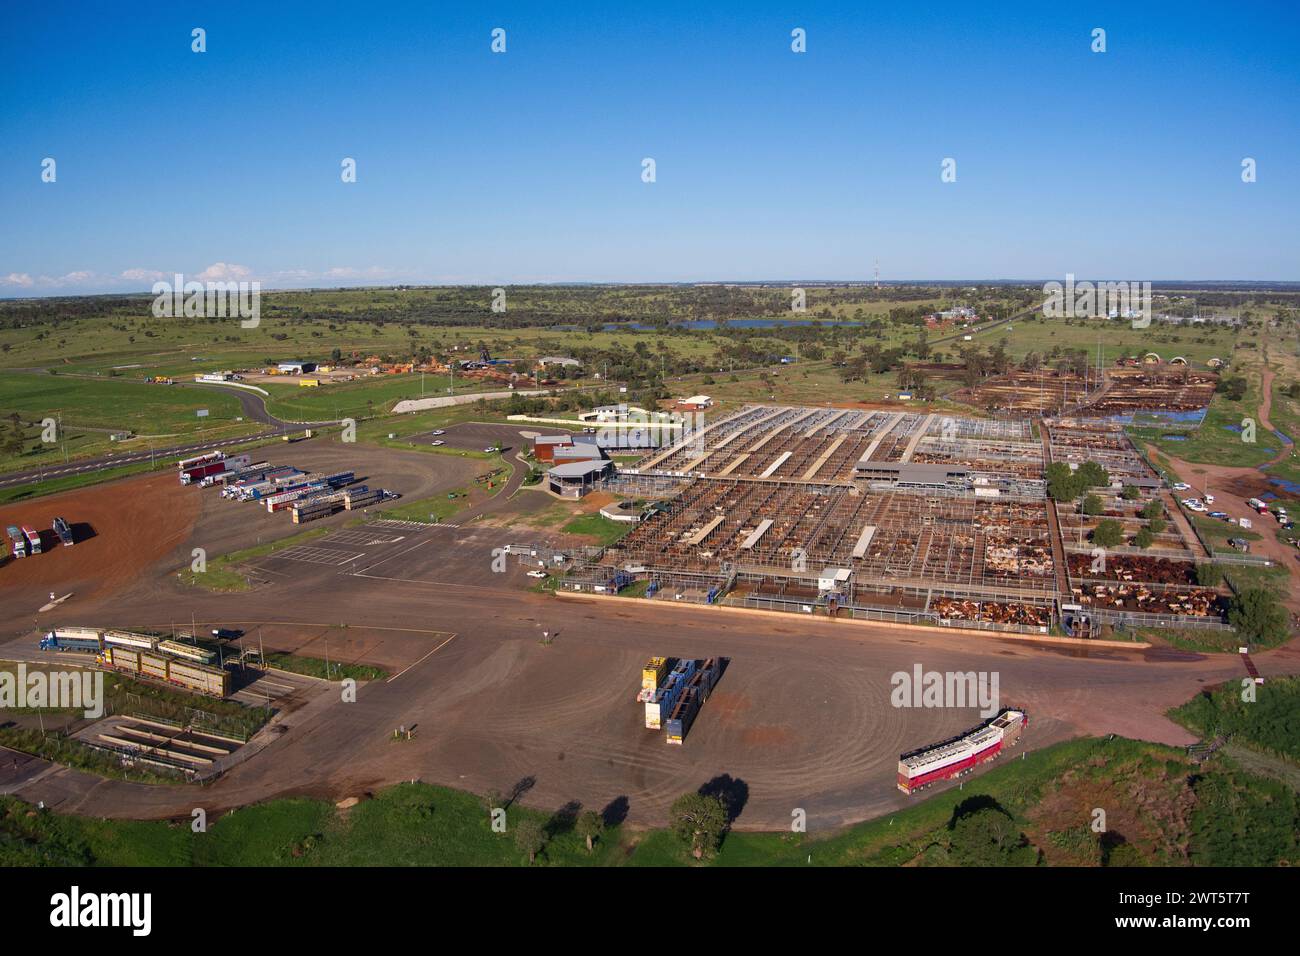 Aerea di saleyards per bestiame Roma Queensland Australia Foto Stock